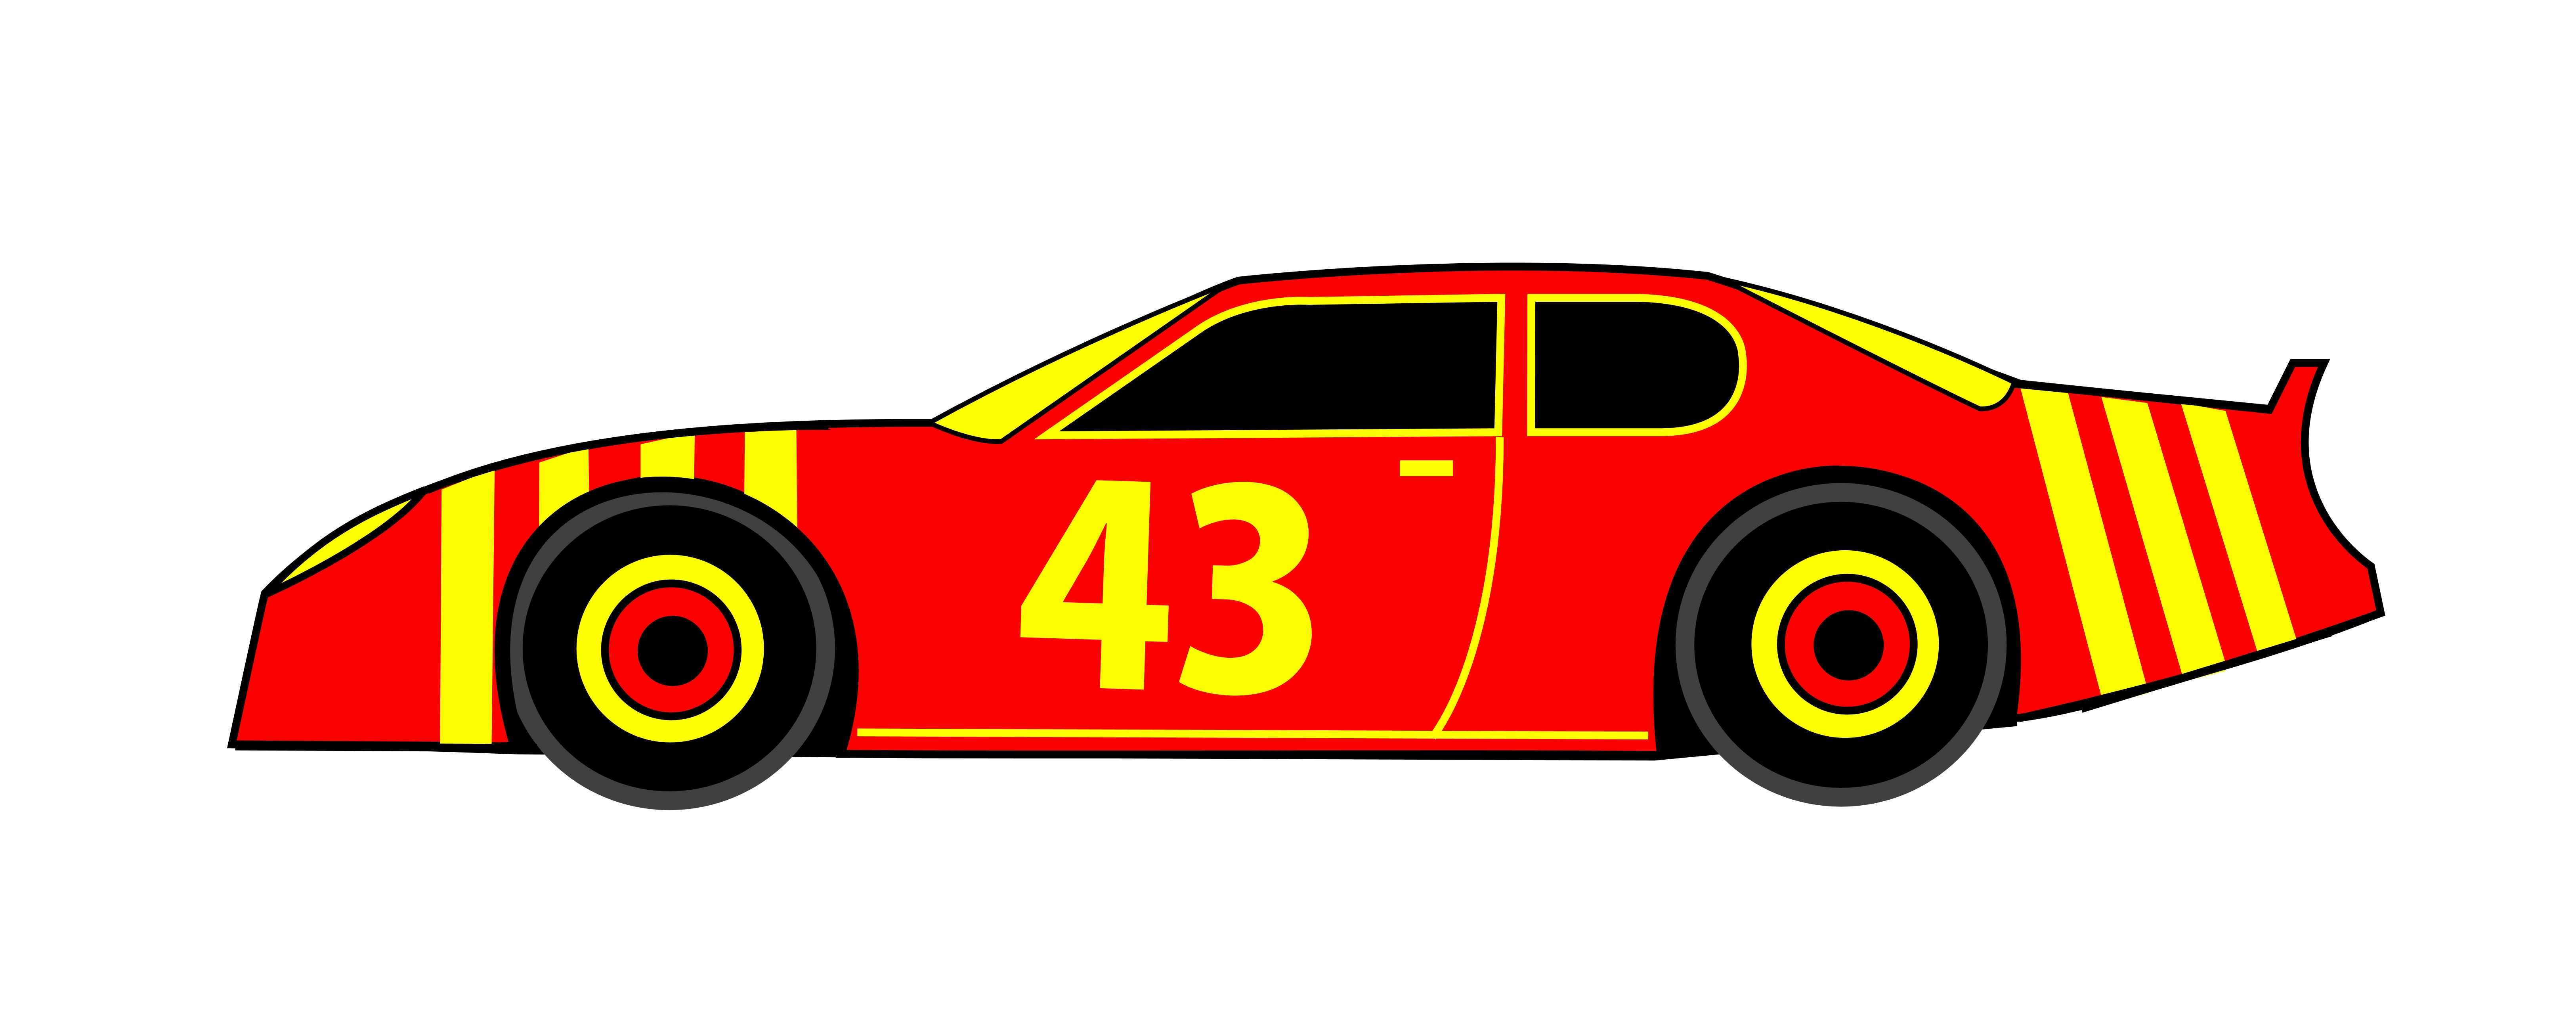 Race car racing cars clip art